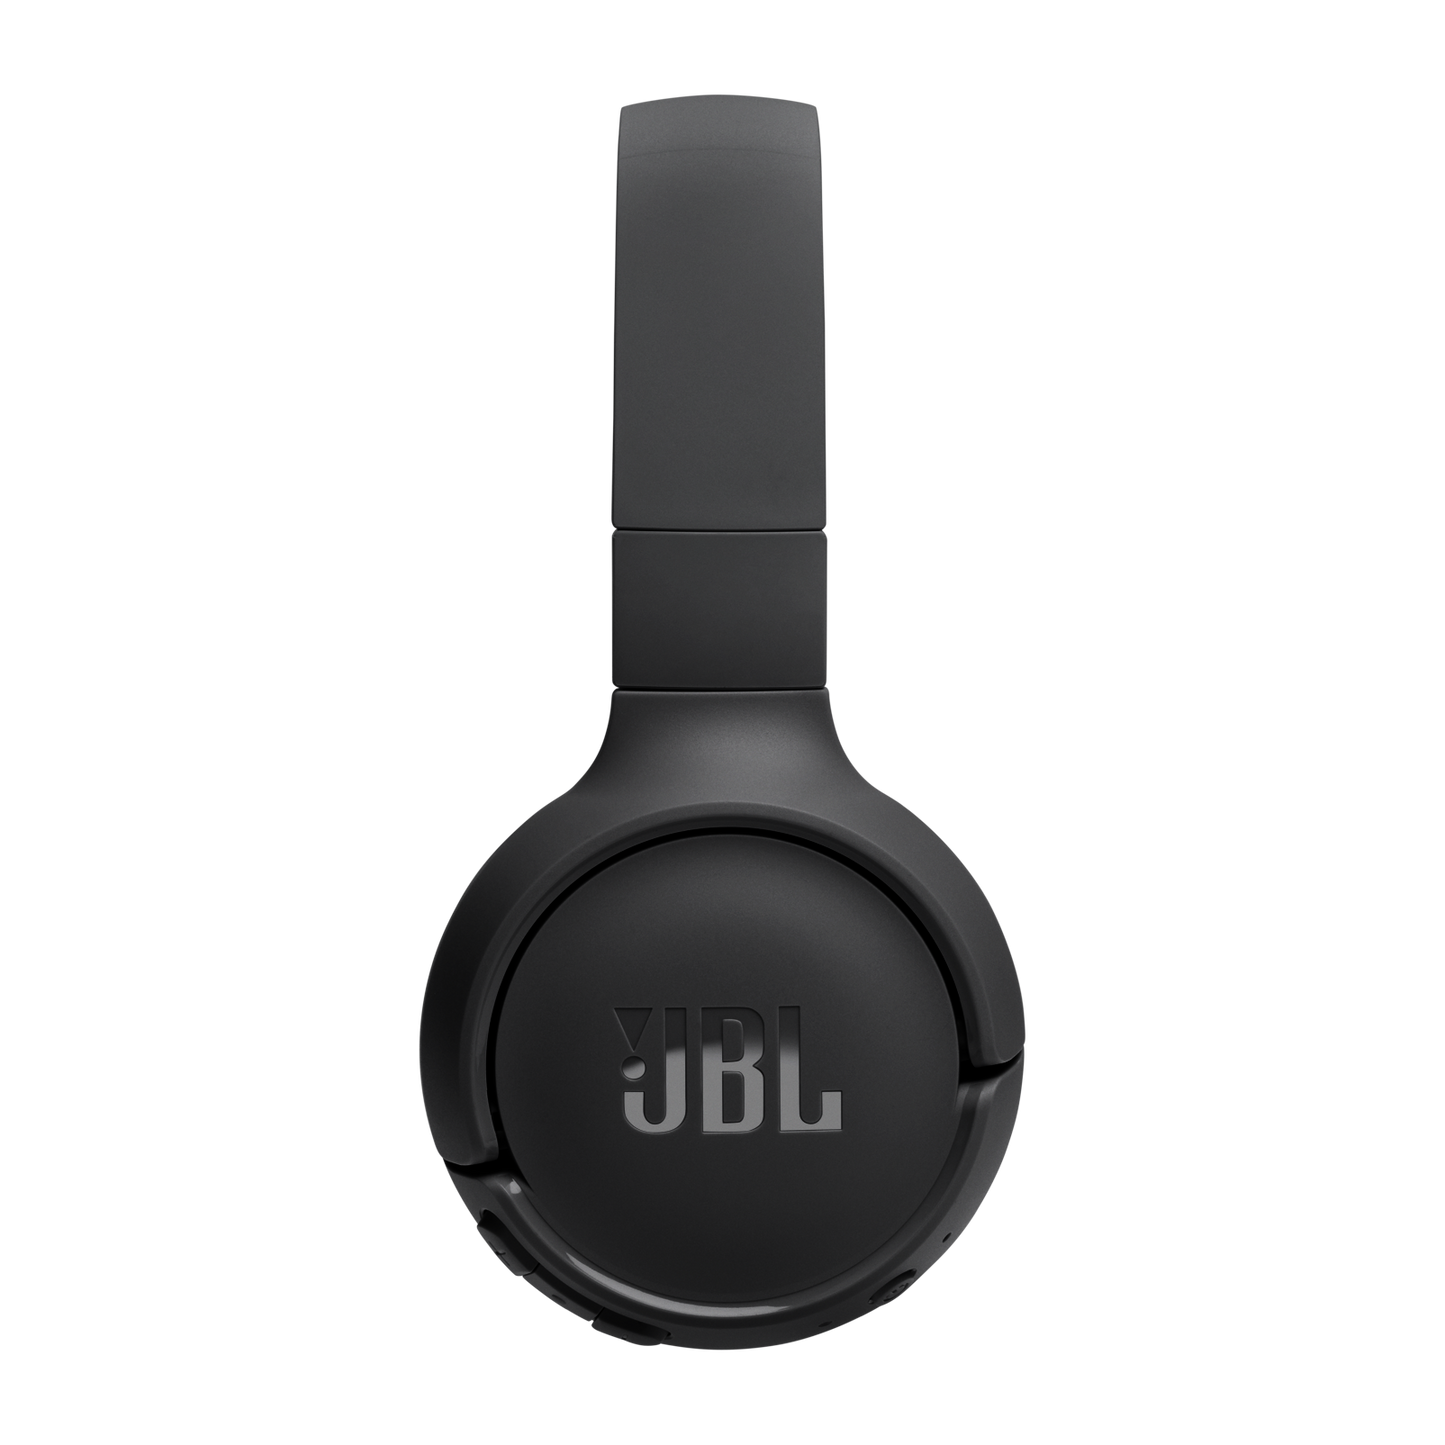 JBL Tune 520BT On-Ear Headphones Sort